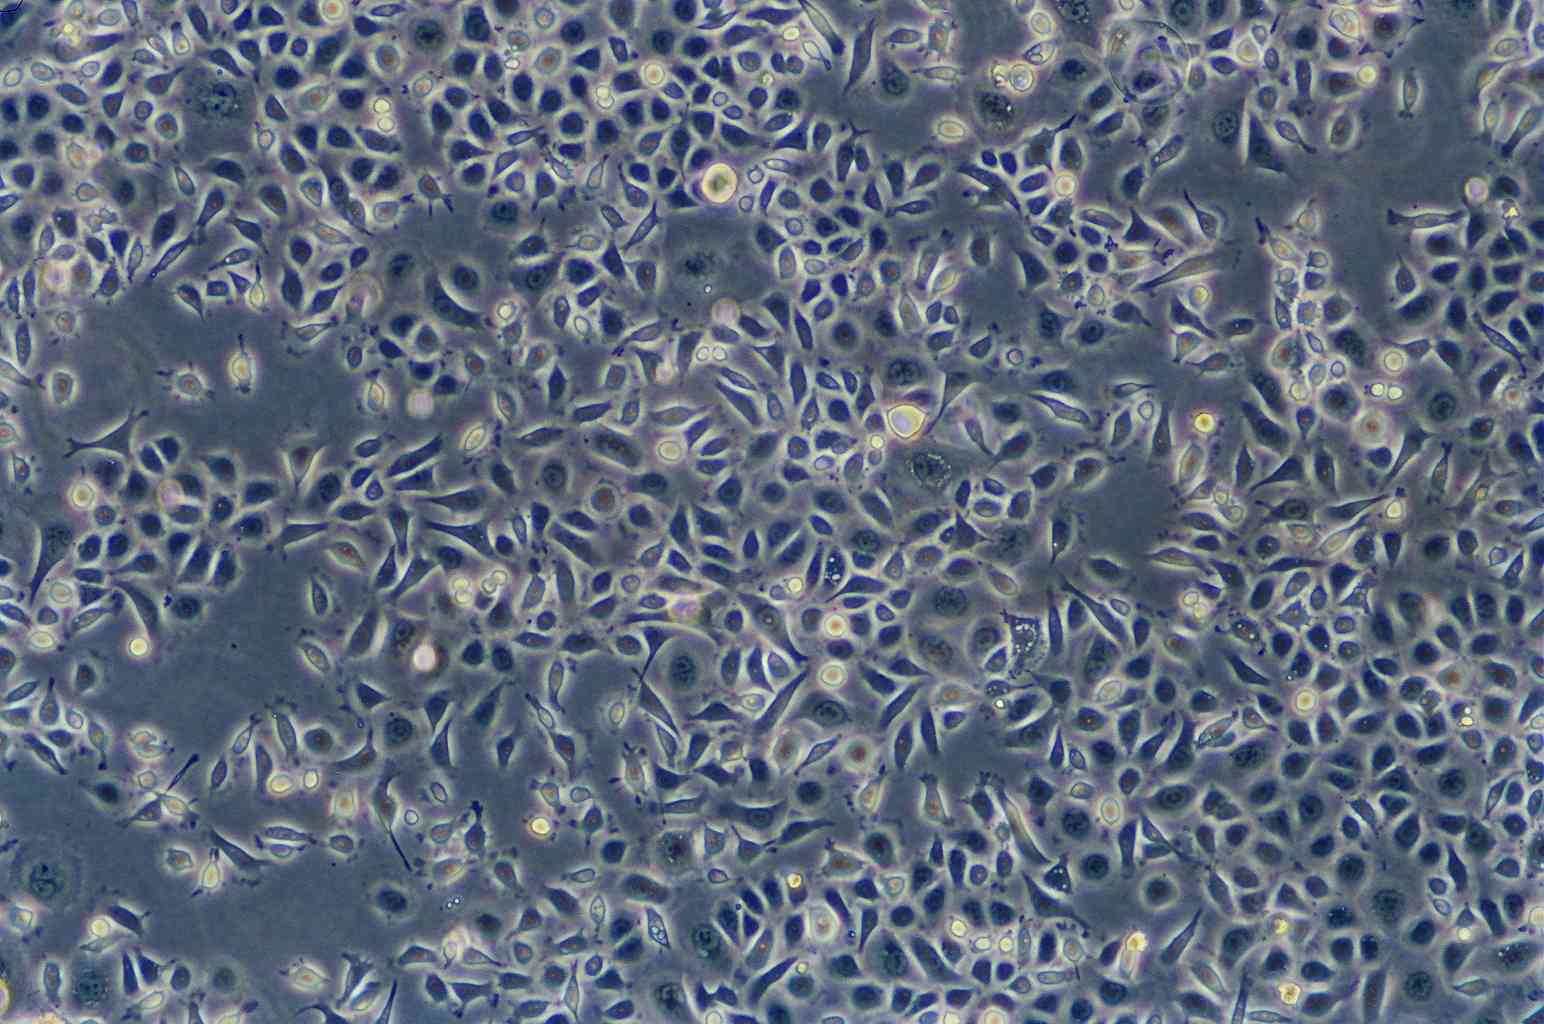 MDA-MB-468 epithelioid cells人乳腺癌细胞系